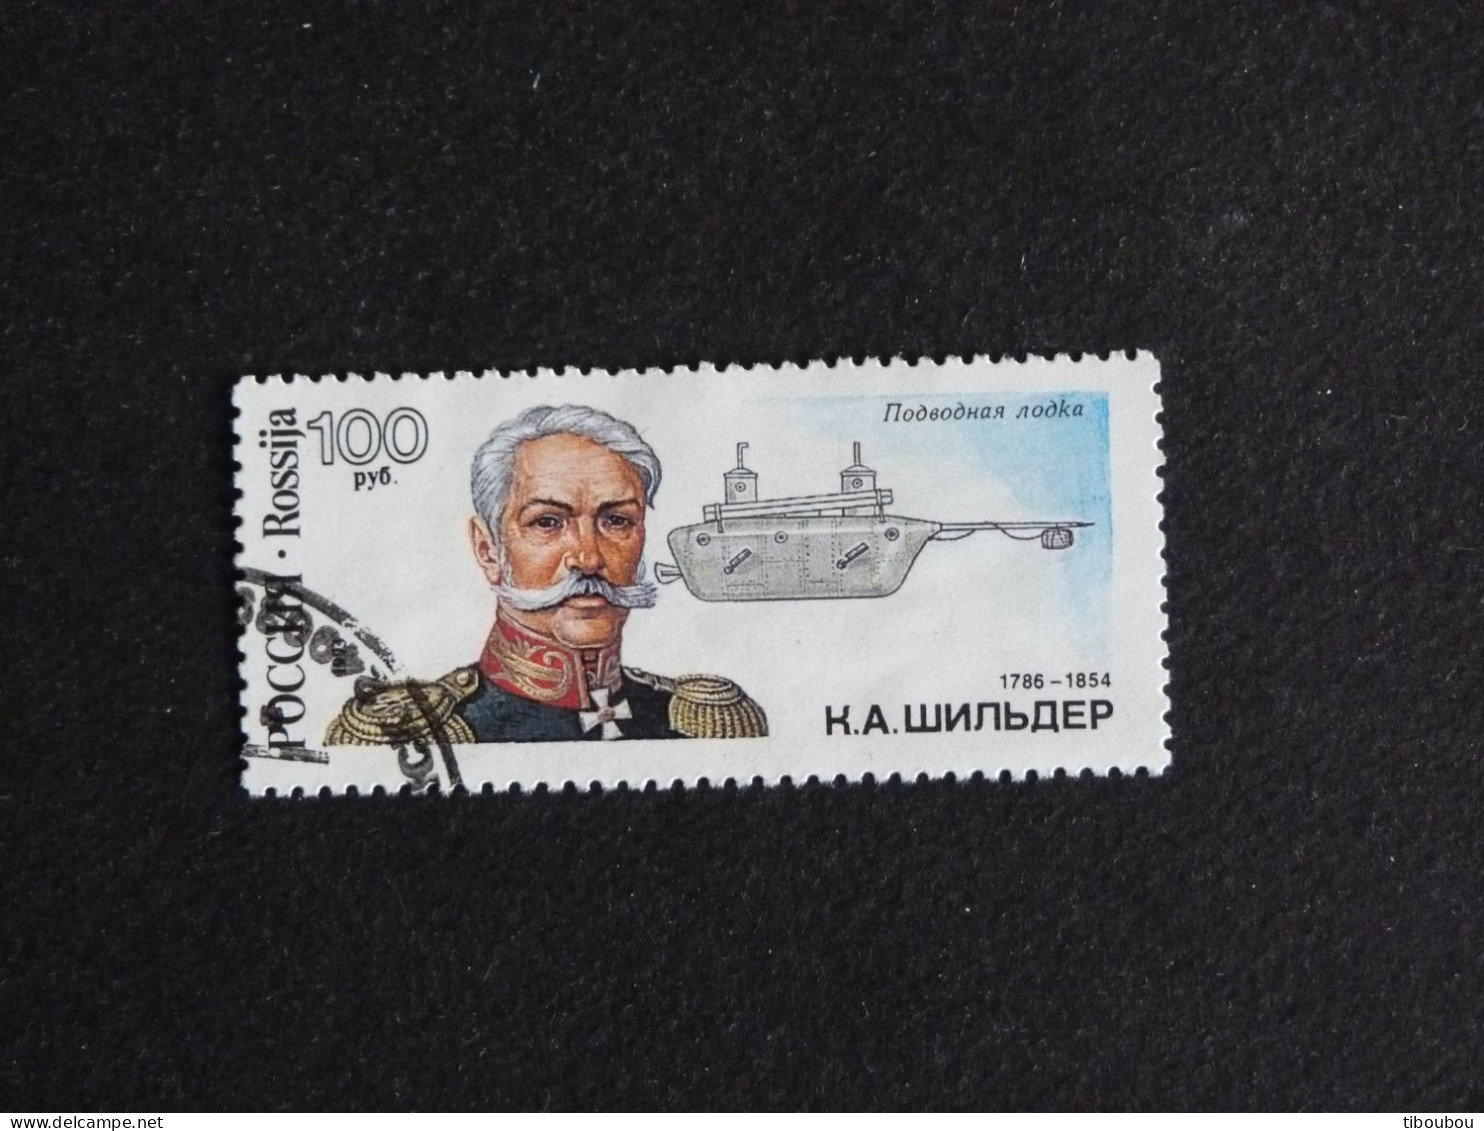 RUSSIE RUSSIA ROSSIJA URSS CCCP 6017 OBLITERE - FLOTTE RUSSE INGENIEURS GENIE MARITIME / SCHILDER SOUS MARIN METALLIQUE - Used Stamps